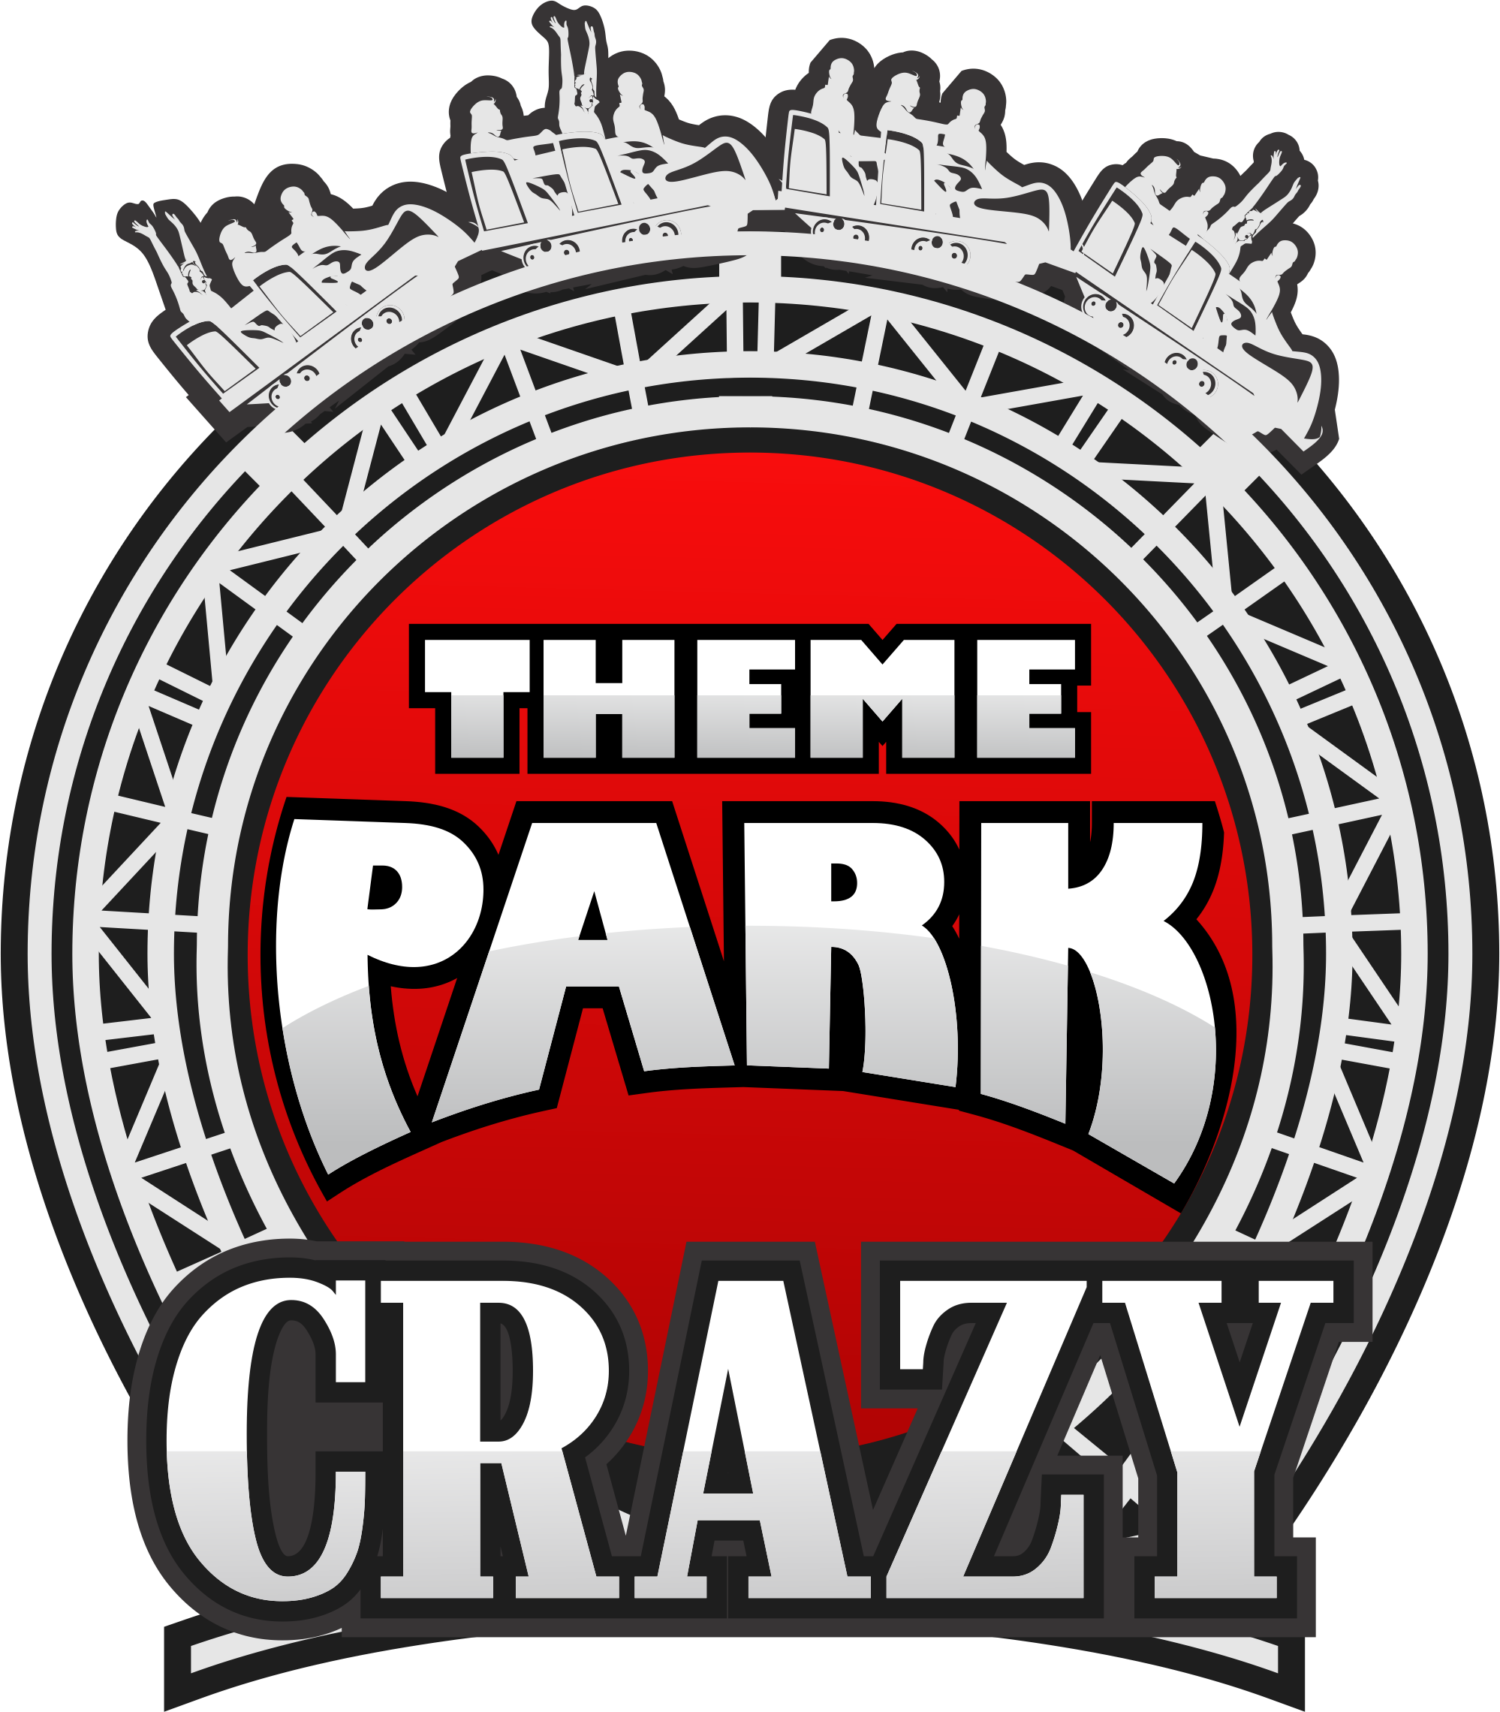 Theme Park Crazy